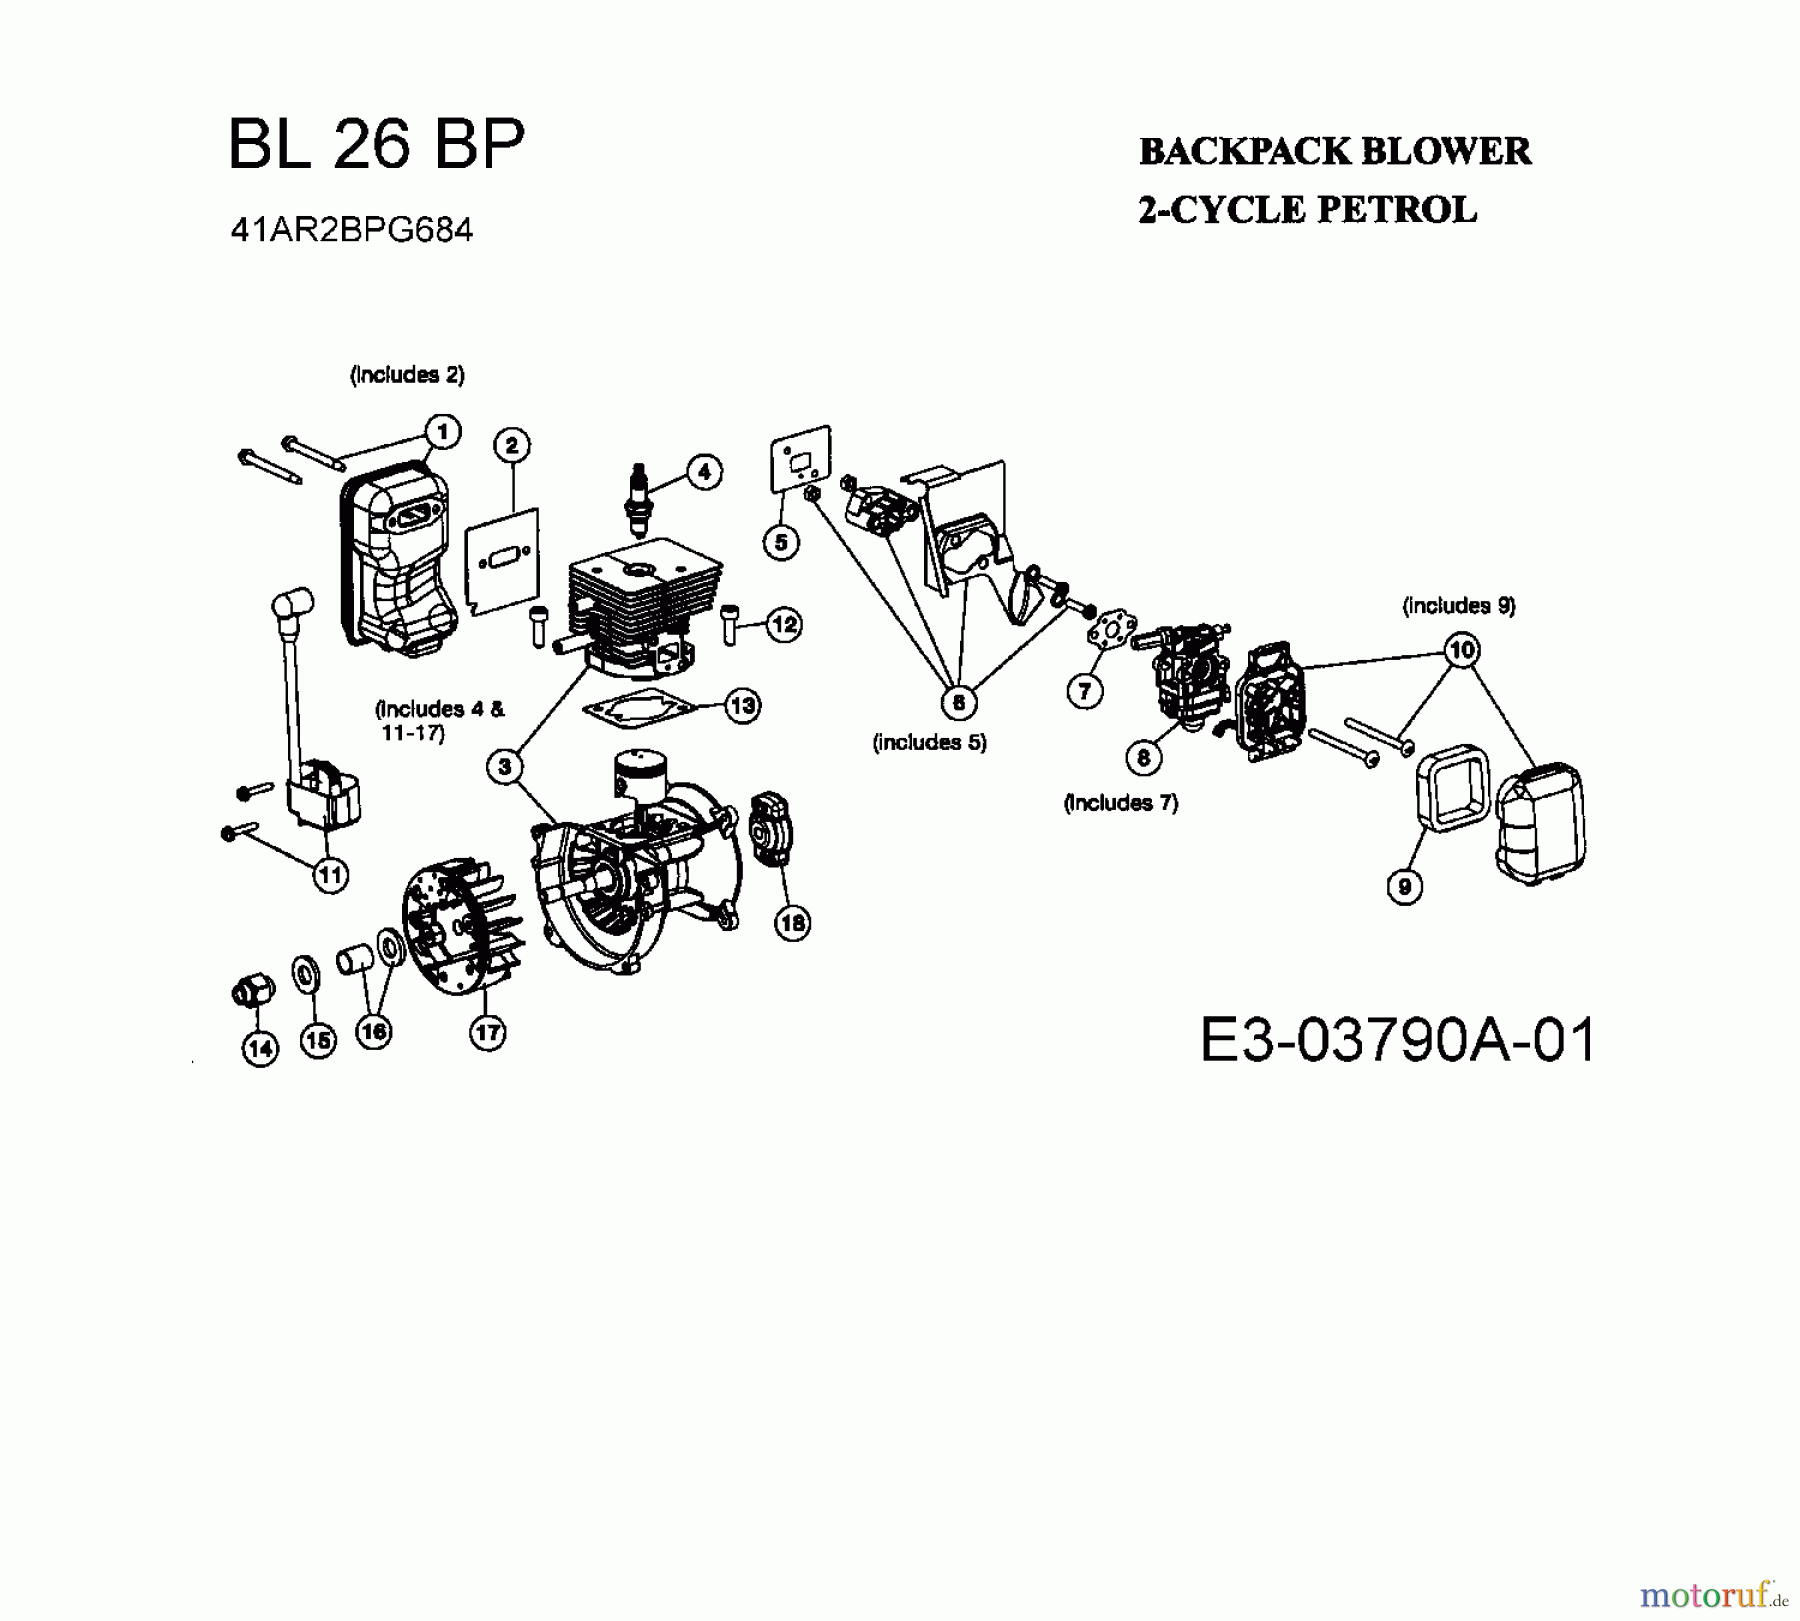  Bolens Chipper, Vac, Compost shredder BL 26 BP 41AR2BPG684  (2008) Engine